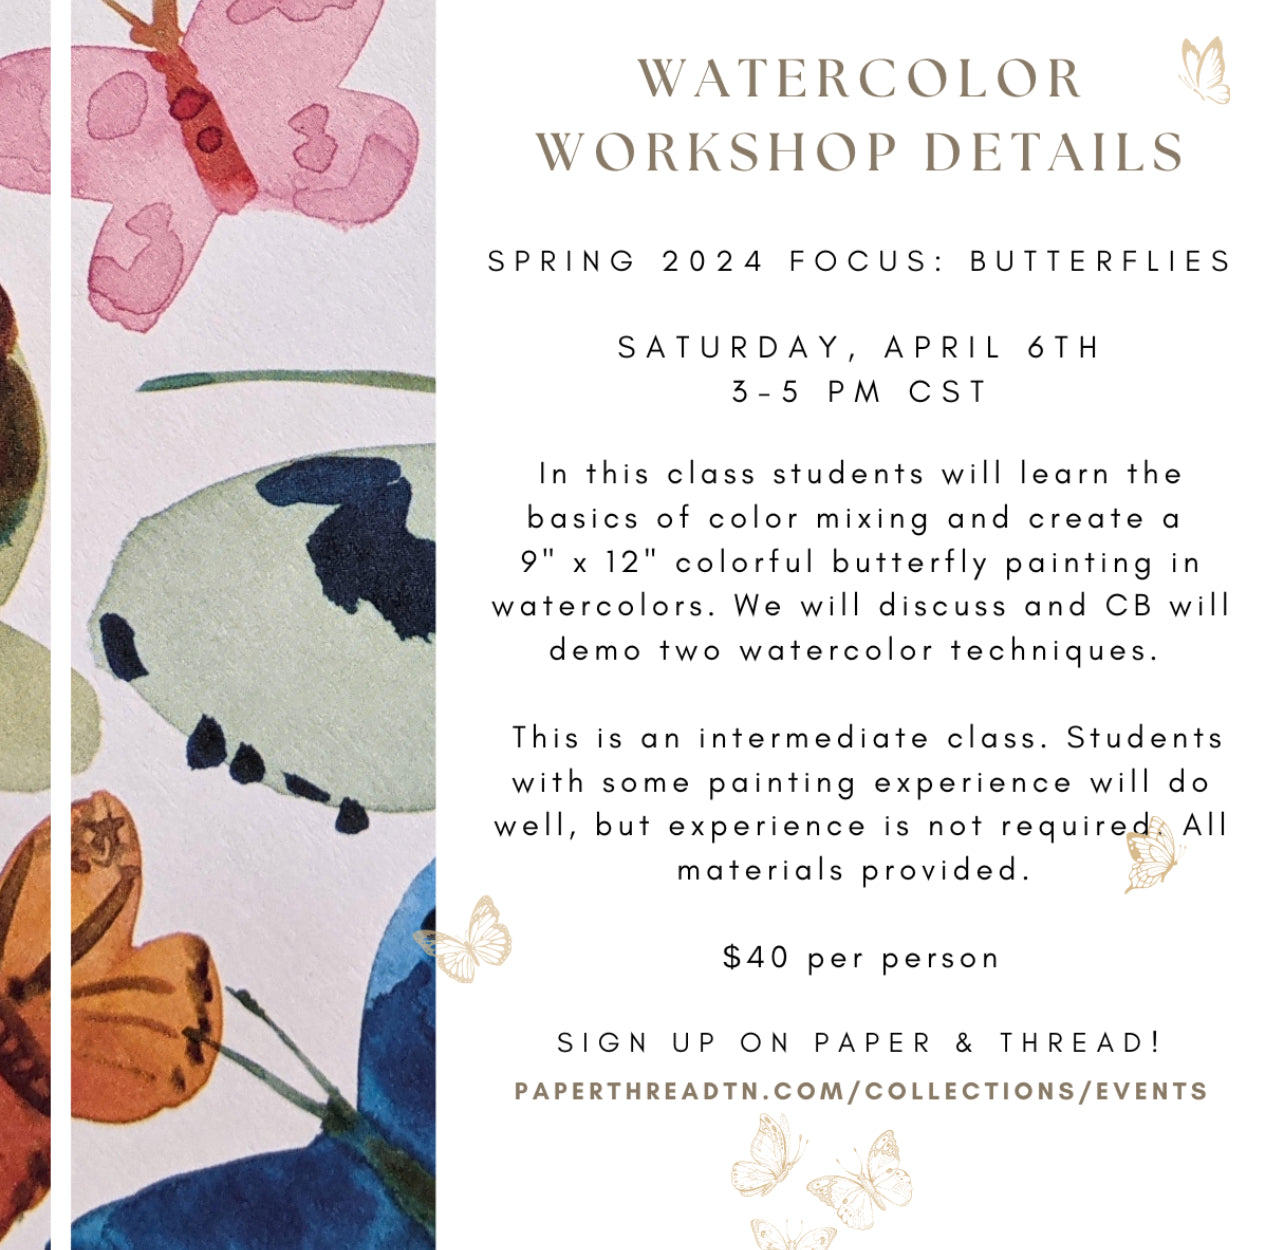 Watercolor 2.0 April 6th 3-5